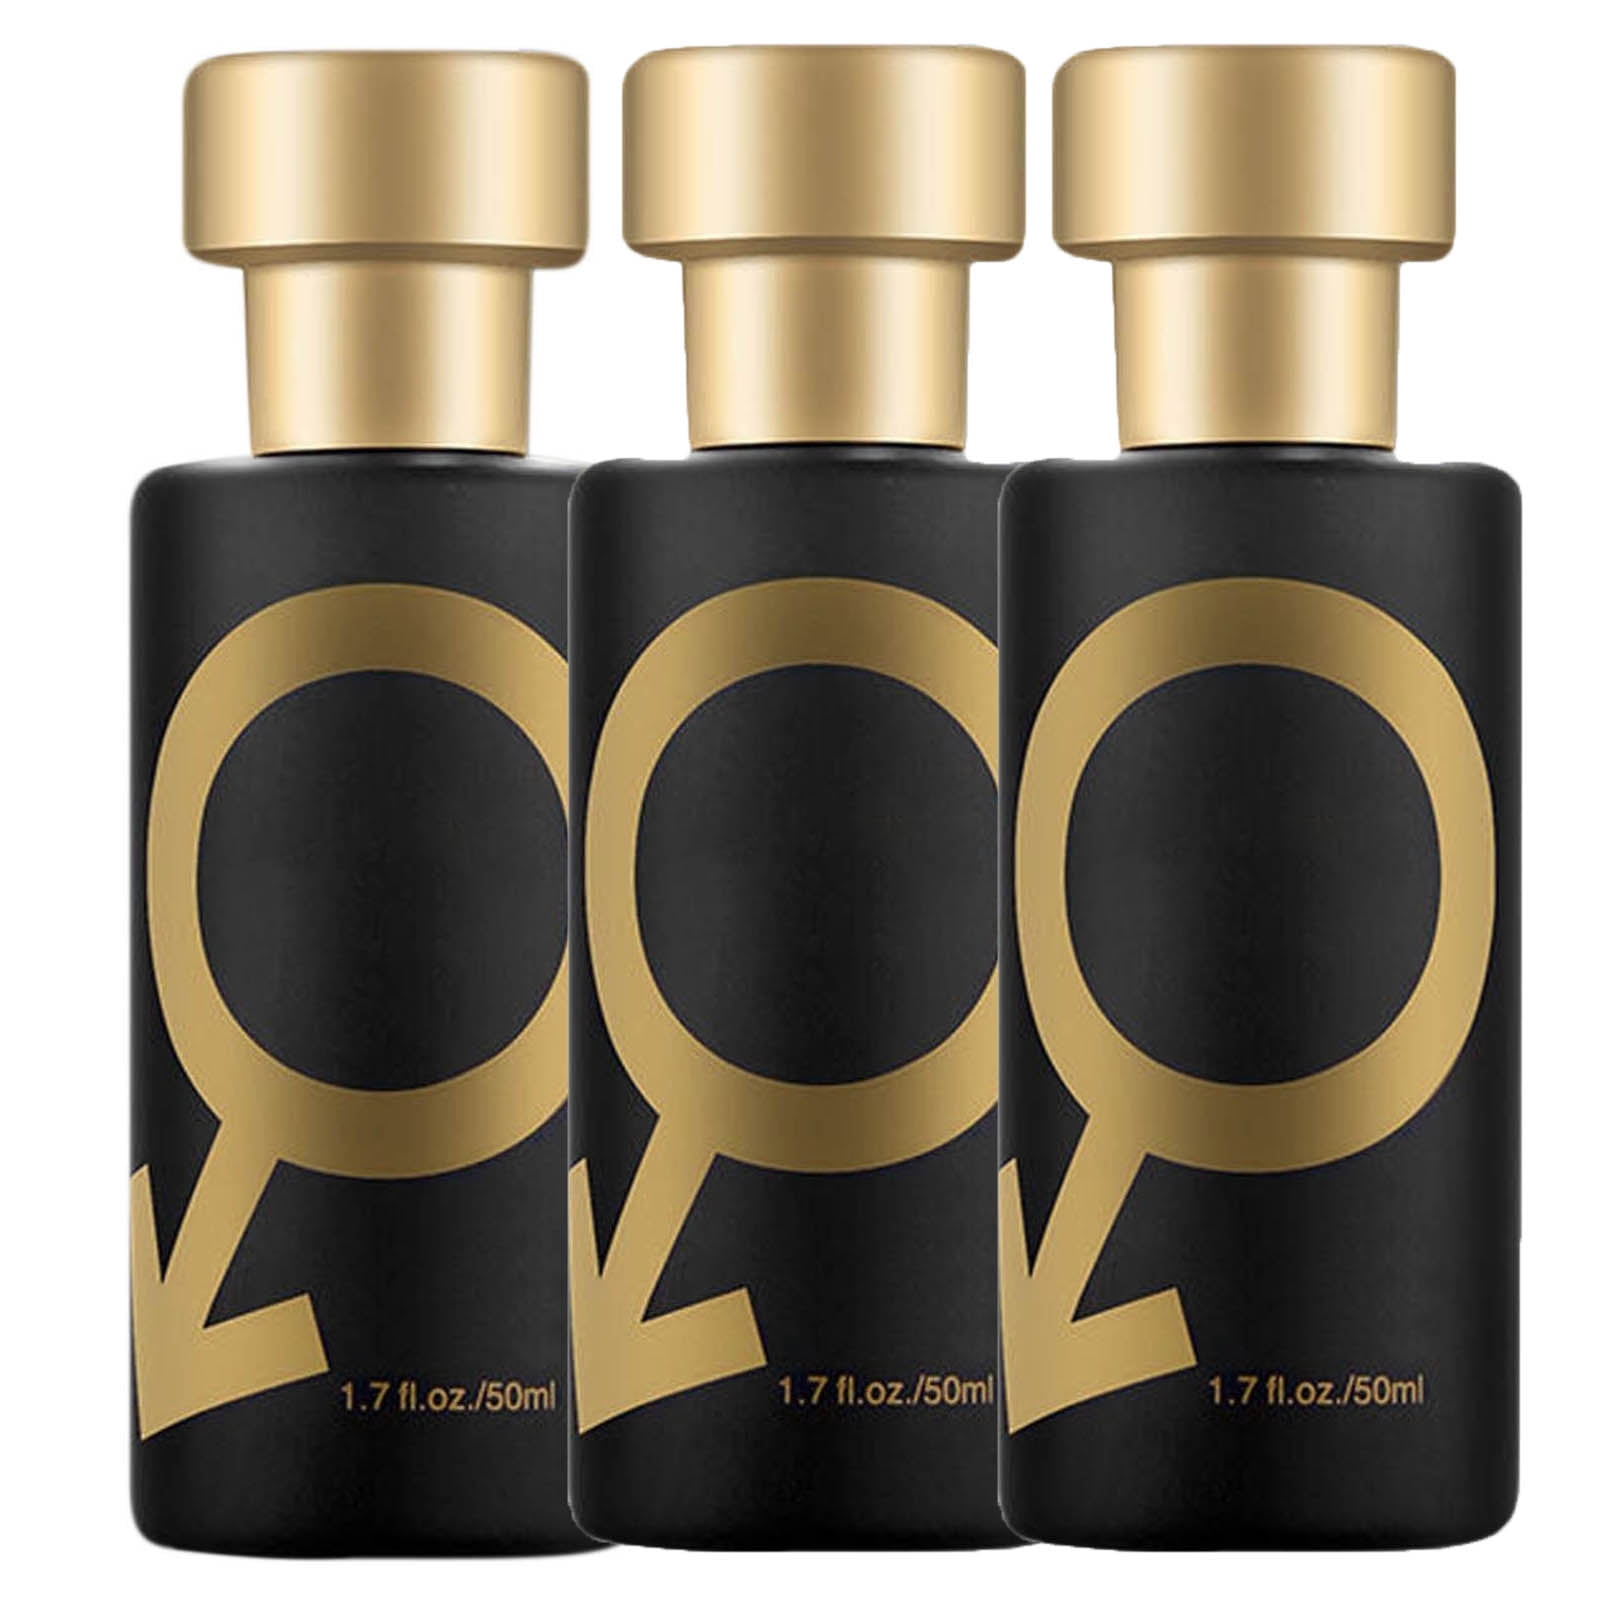 BINGTAOHU Golden Lure Perfume, 50ml Golden Lure Perfume to Attract